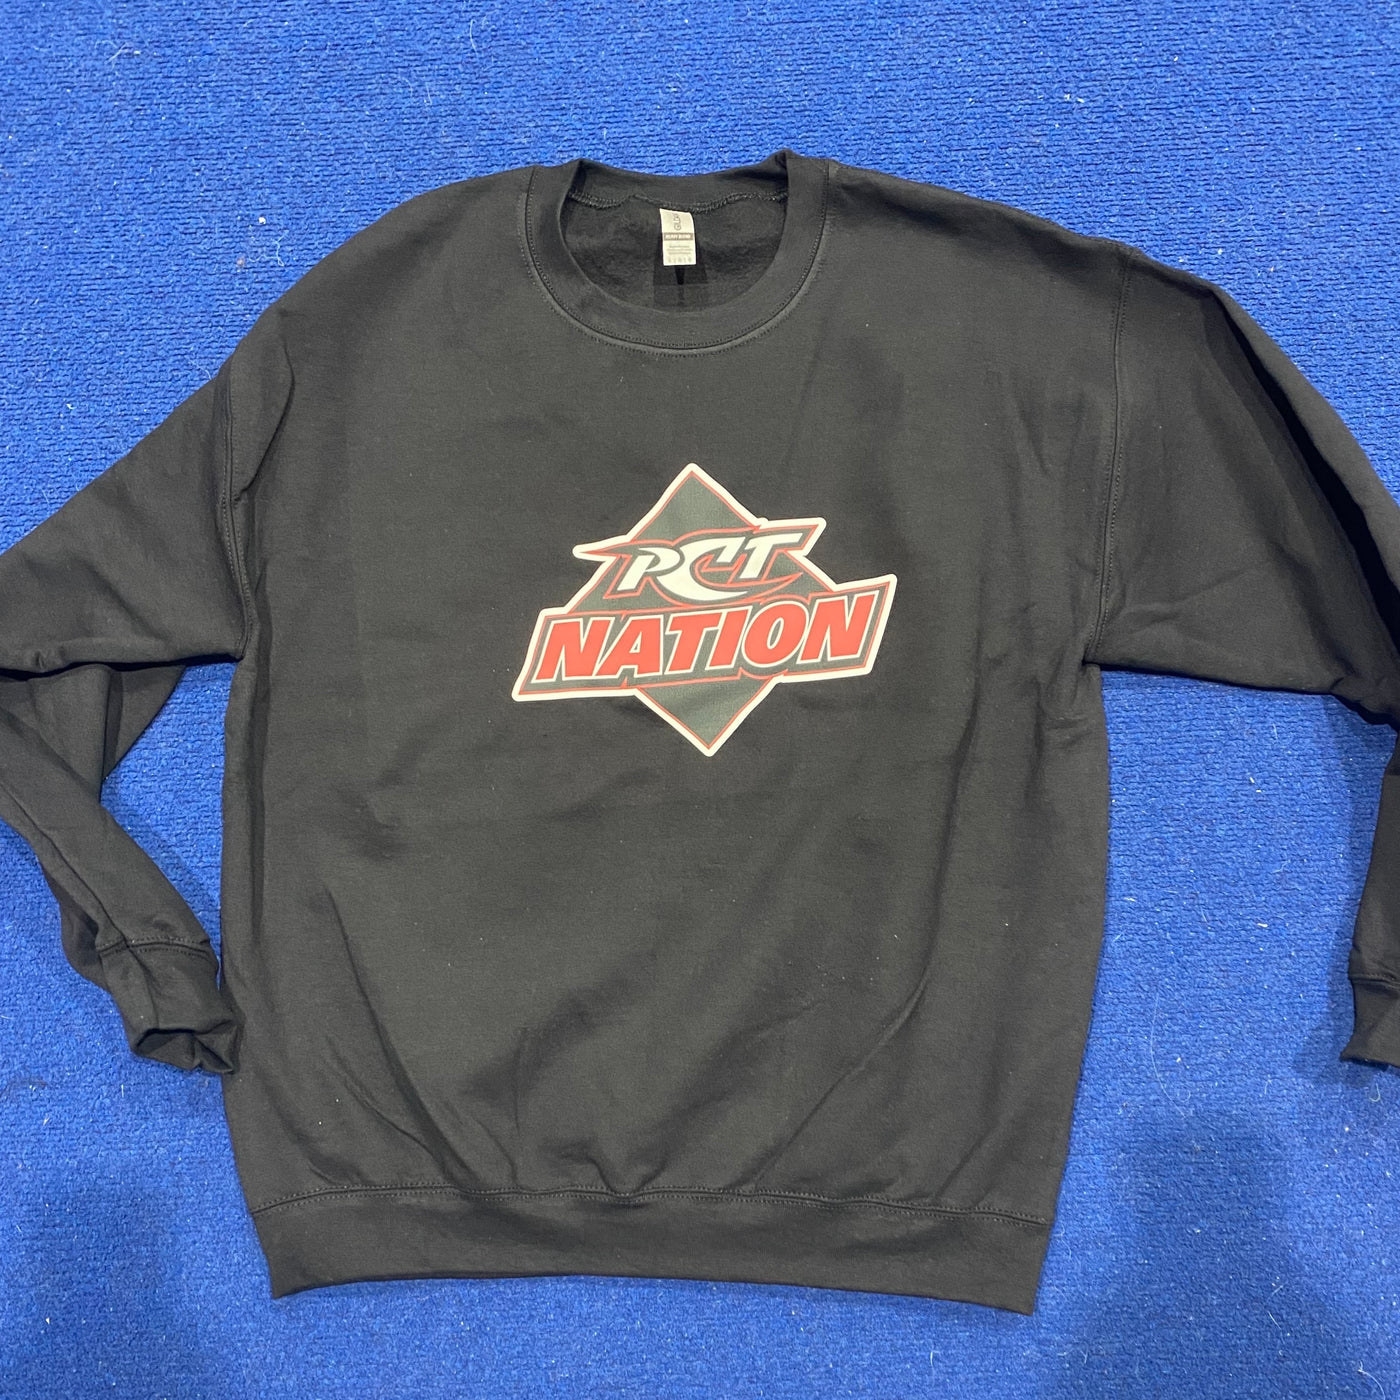 PCT Nation Sweatshirt